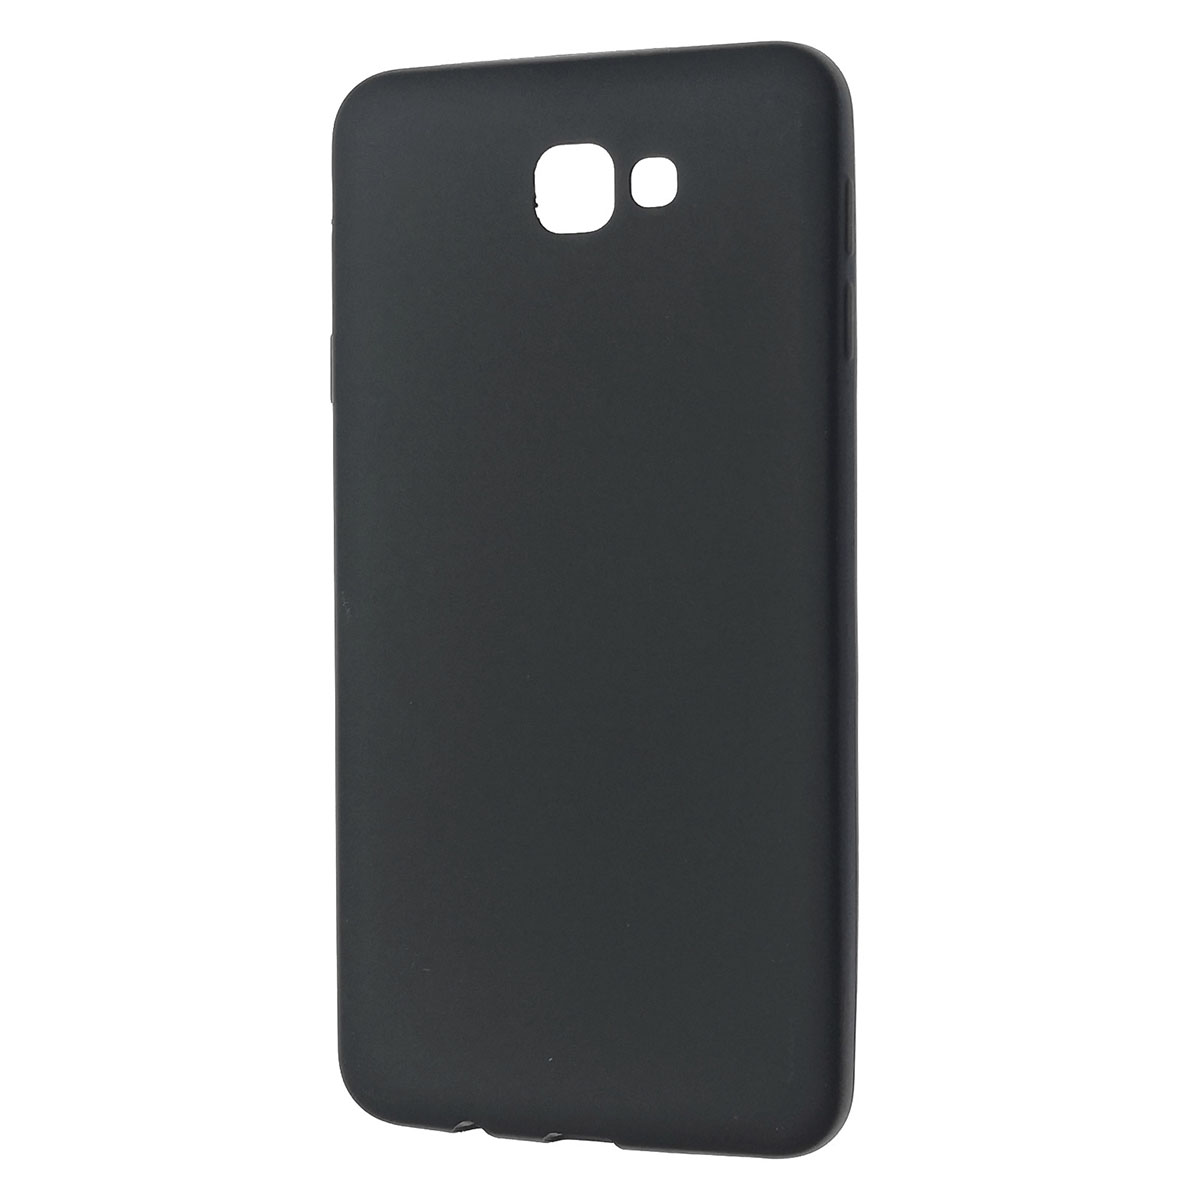 Чехол накладка J-Case THIN для SAMSUNG Galaxy J7 Prime (SM-G610), силикон, цвет черный.